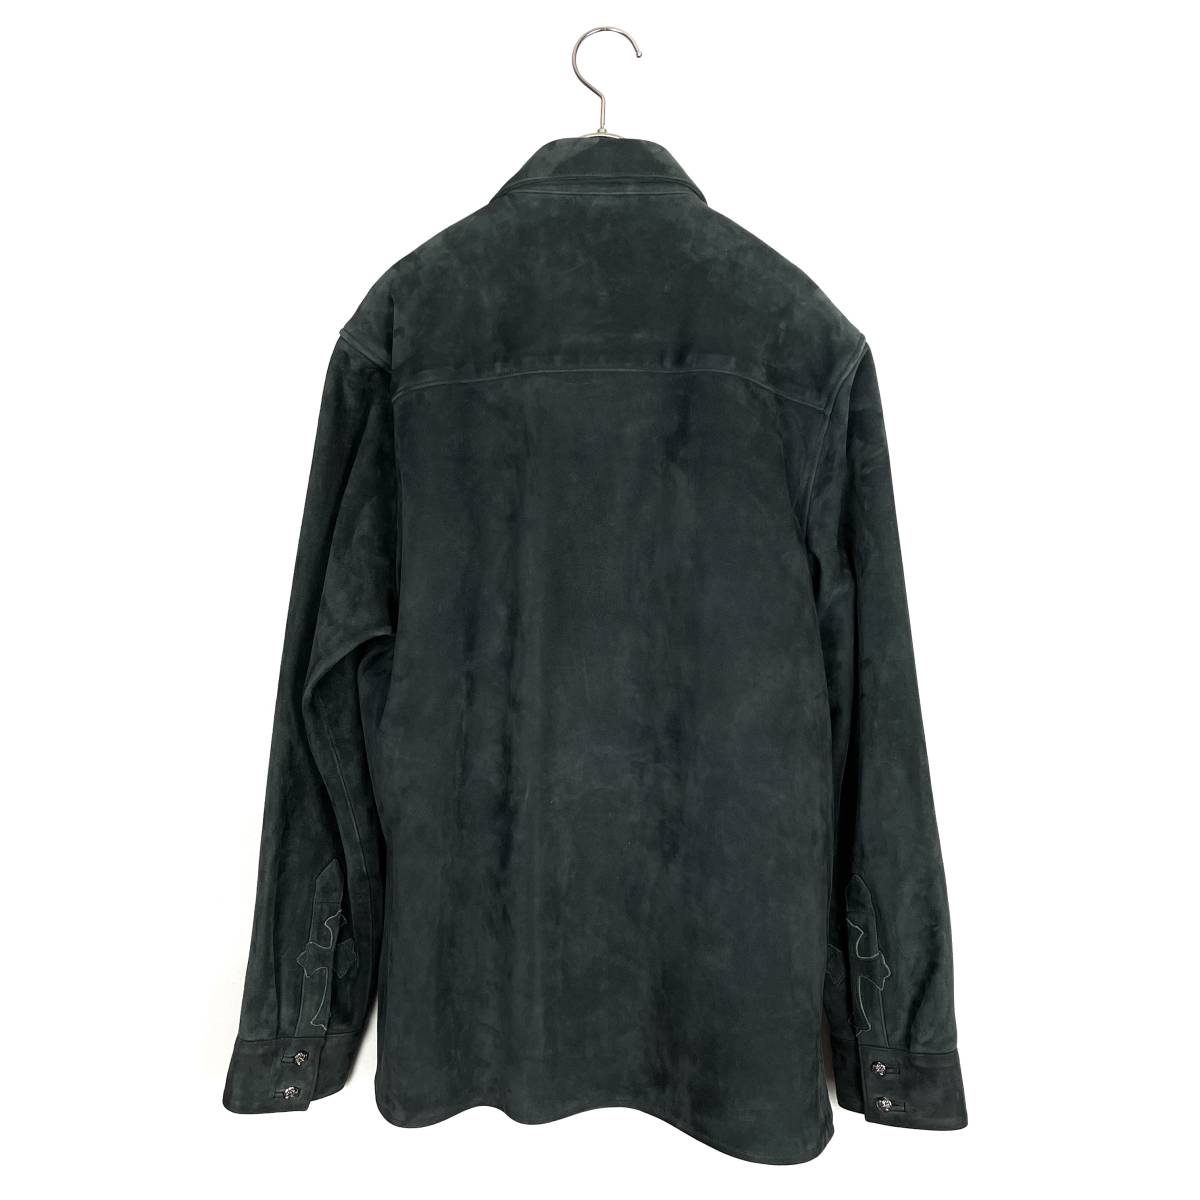 CHROME HEARTS(クロムハーツ) suede leather jacket (black)_画像4